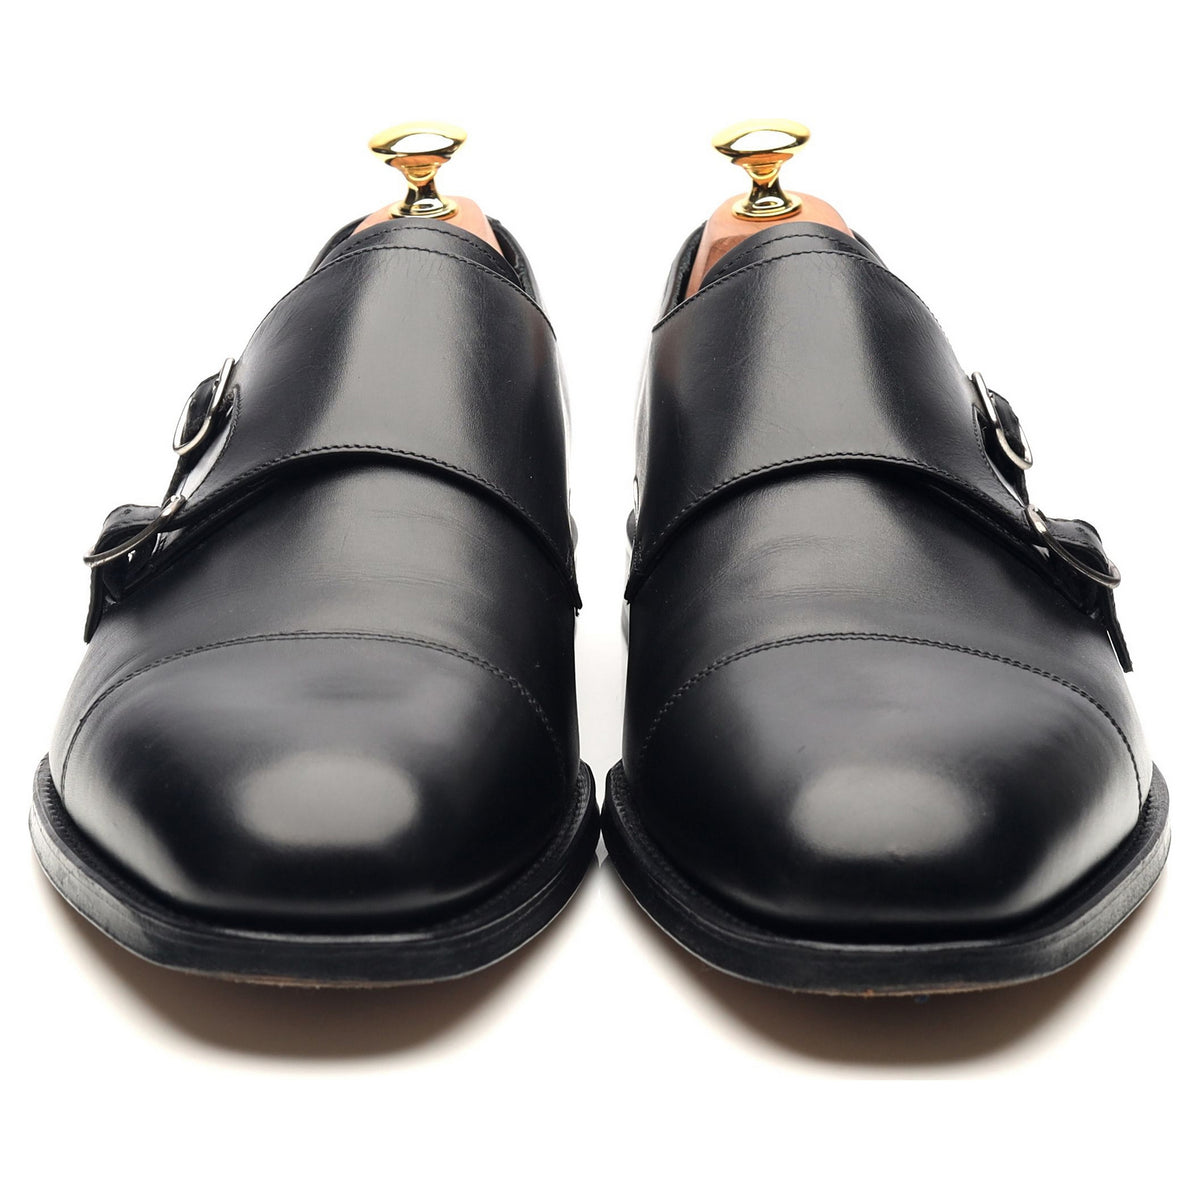 1880 &#39;Cannon&#39; Black Leather Double Monk Strap UK 10 F